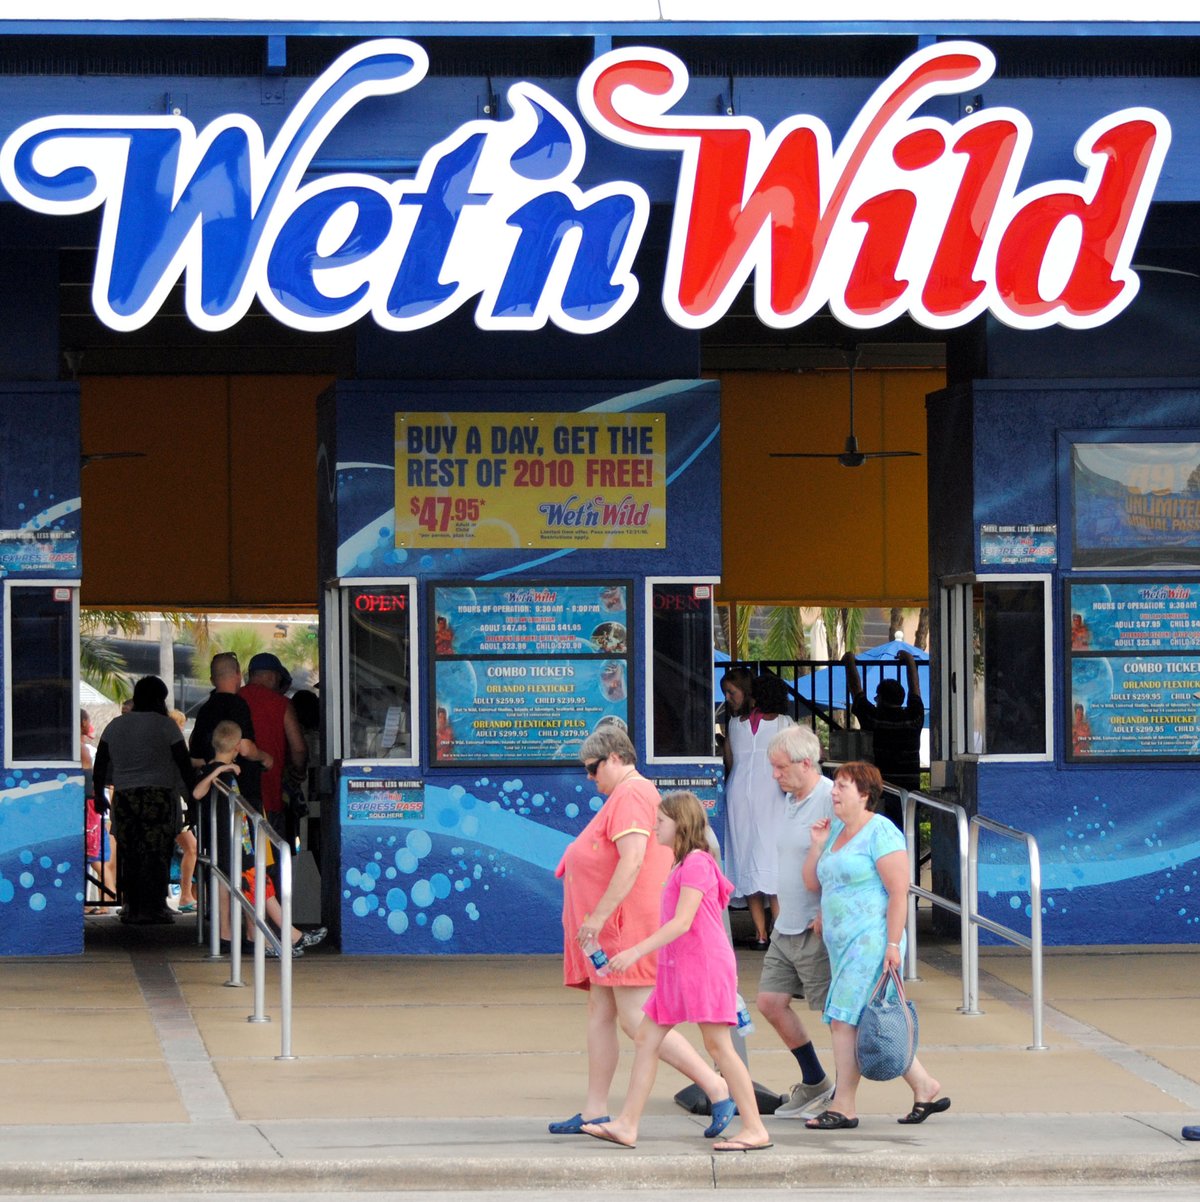 Wet 'n Wild demolition expected to cost $3 million – Orlando Sentinel